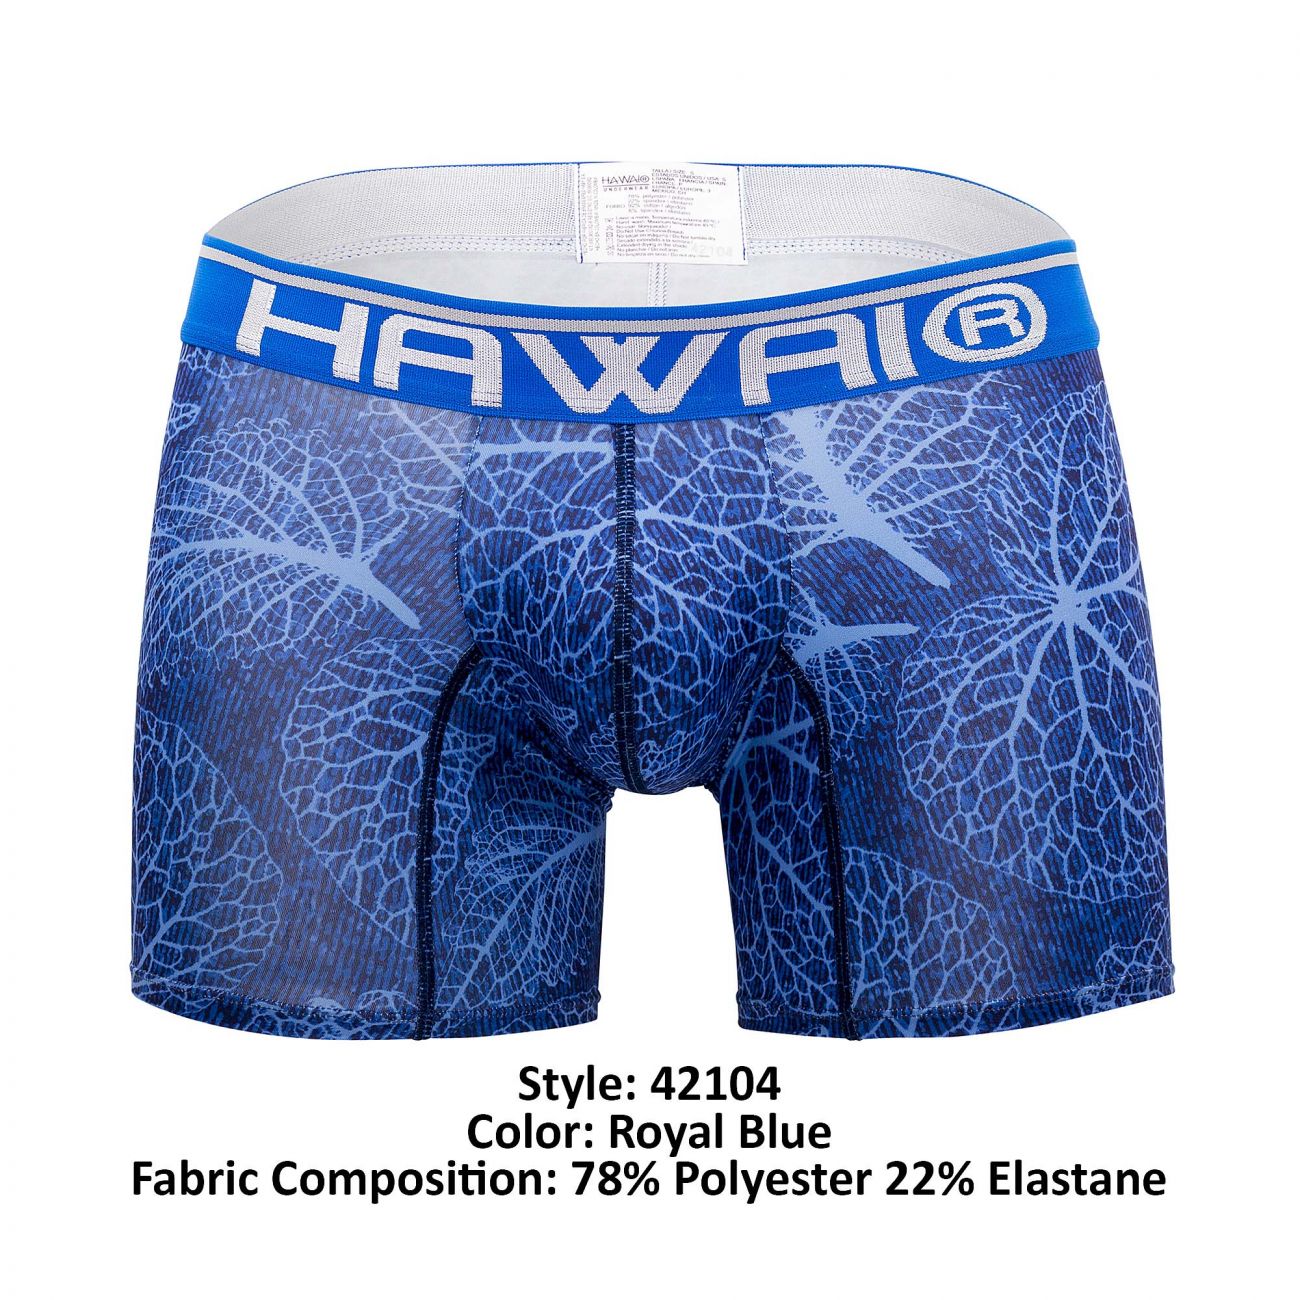 HAWAI 42104 Printed Boxer Briefs Royal Blue